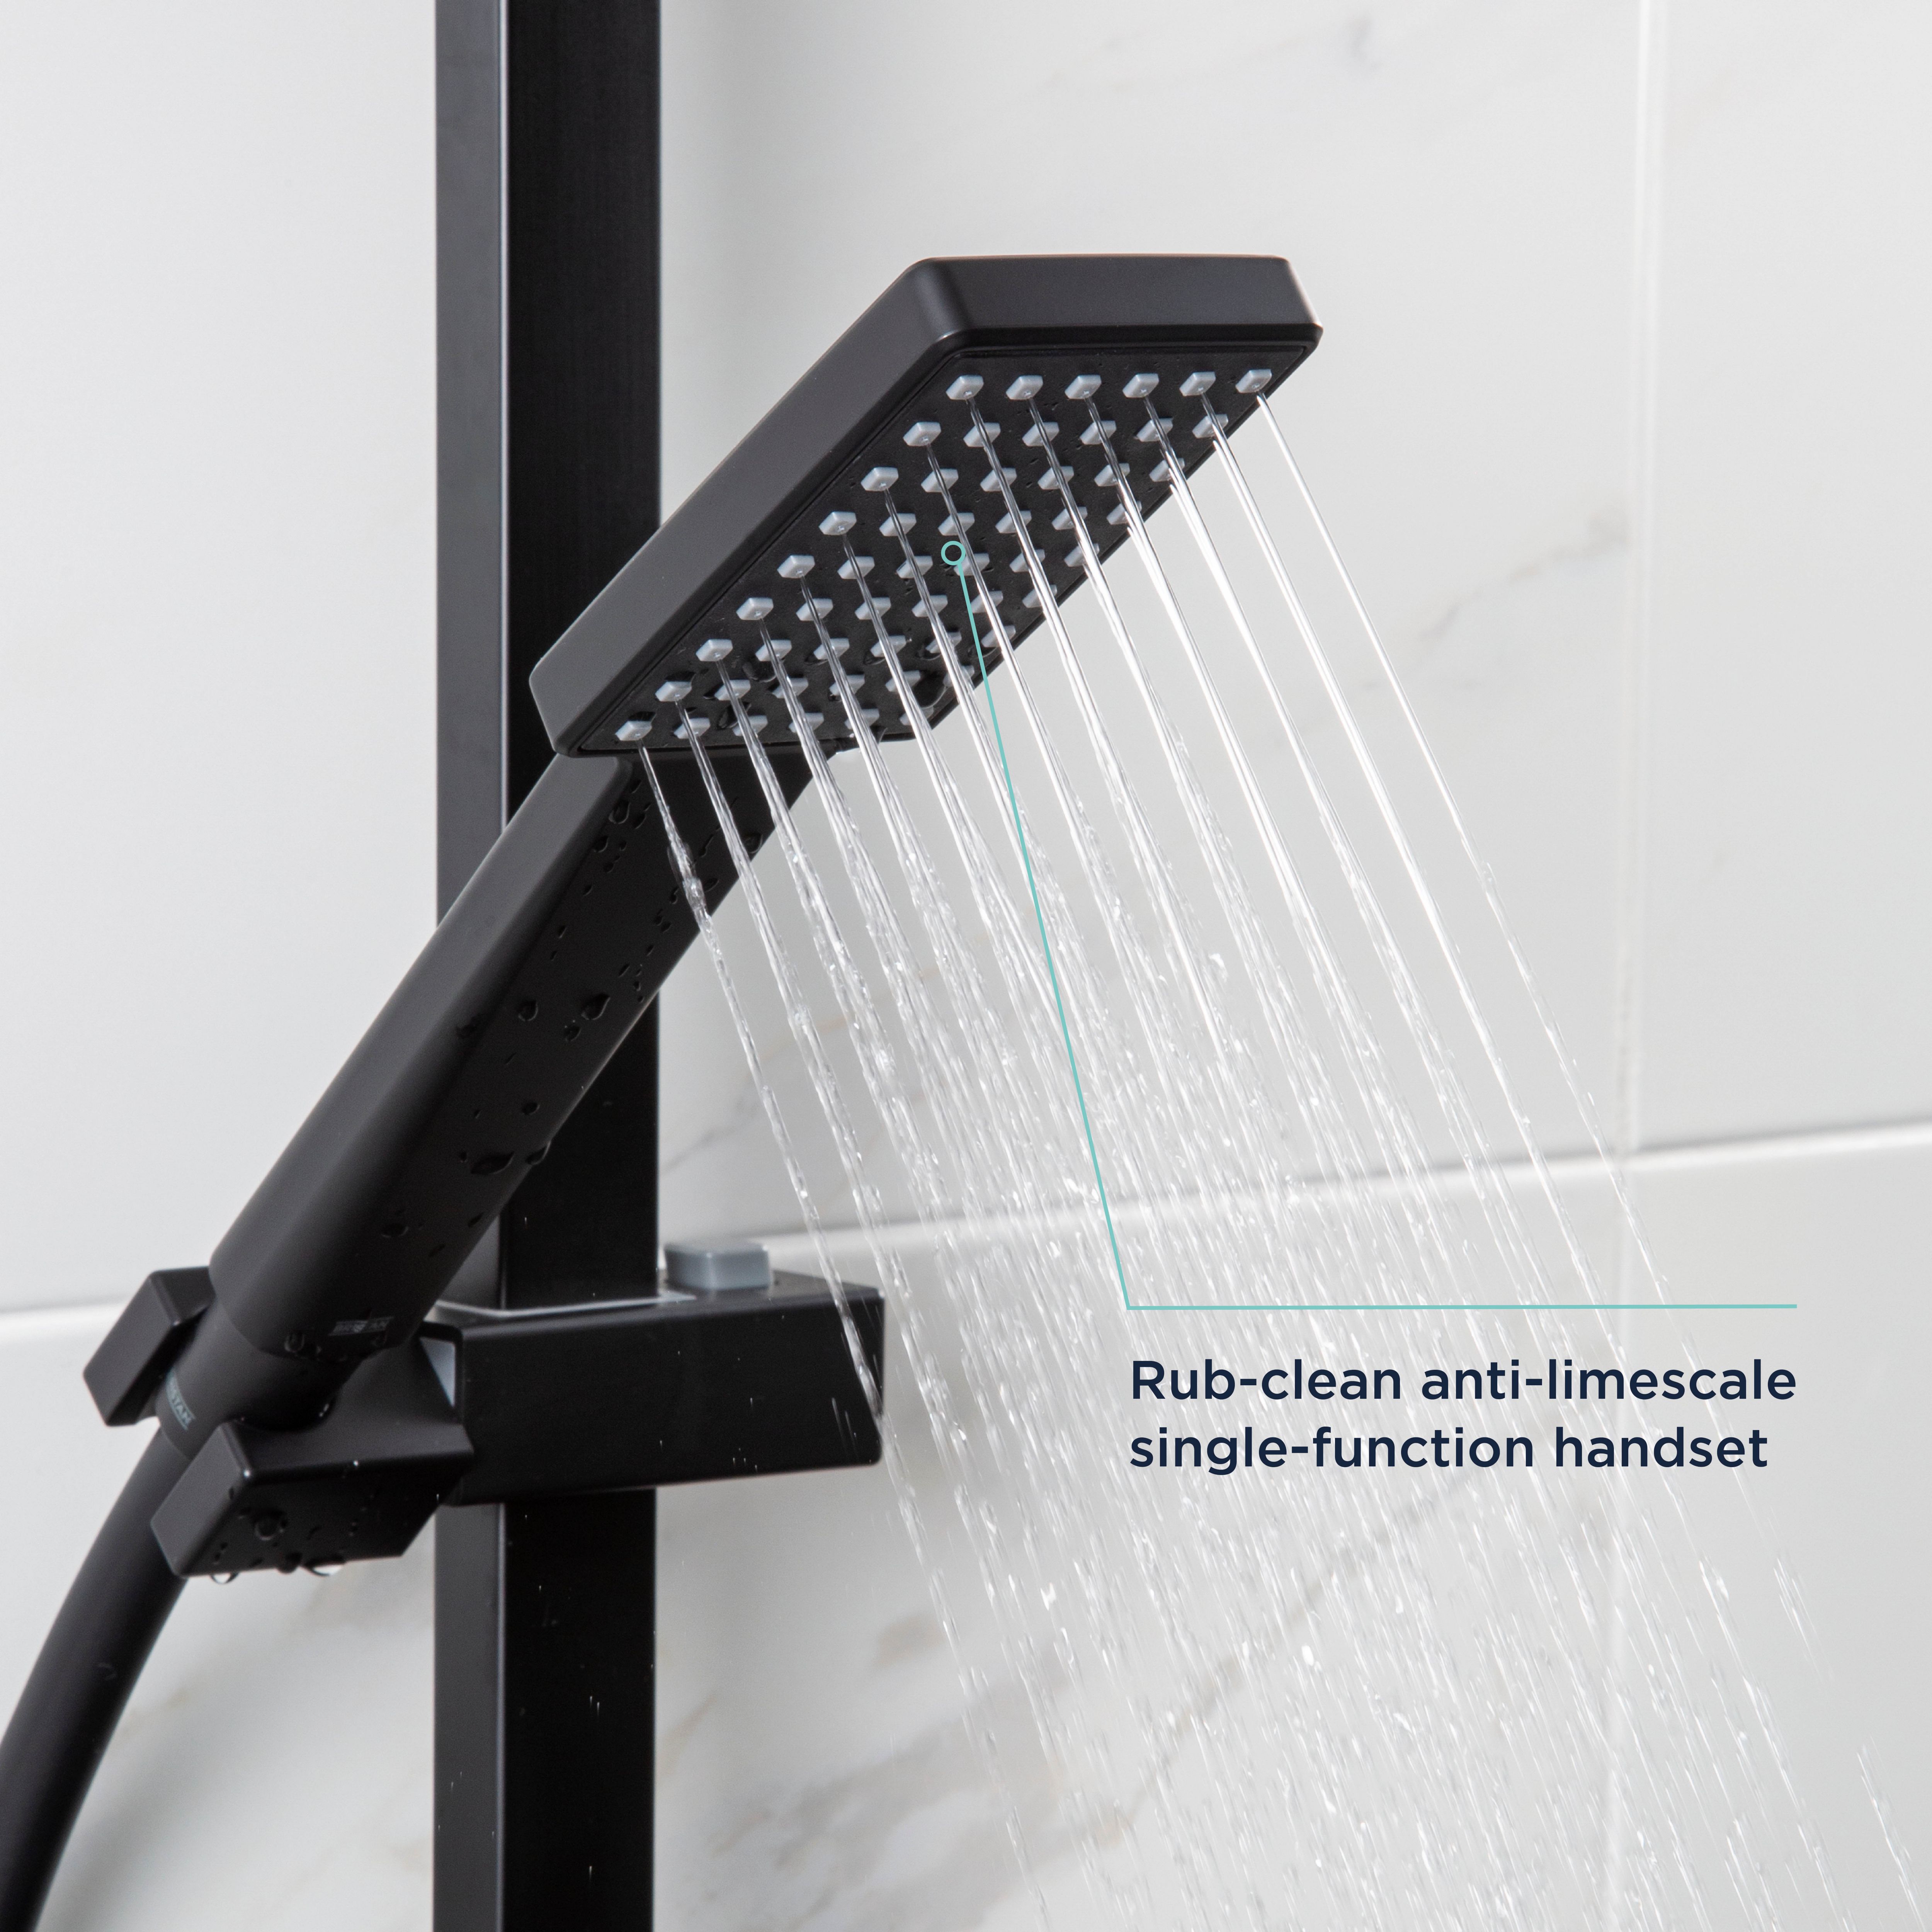 Bristan Noctis Matt Black Wall-mounted Thermostatic Mixer Multi head shower